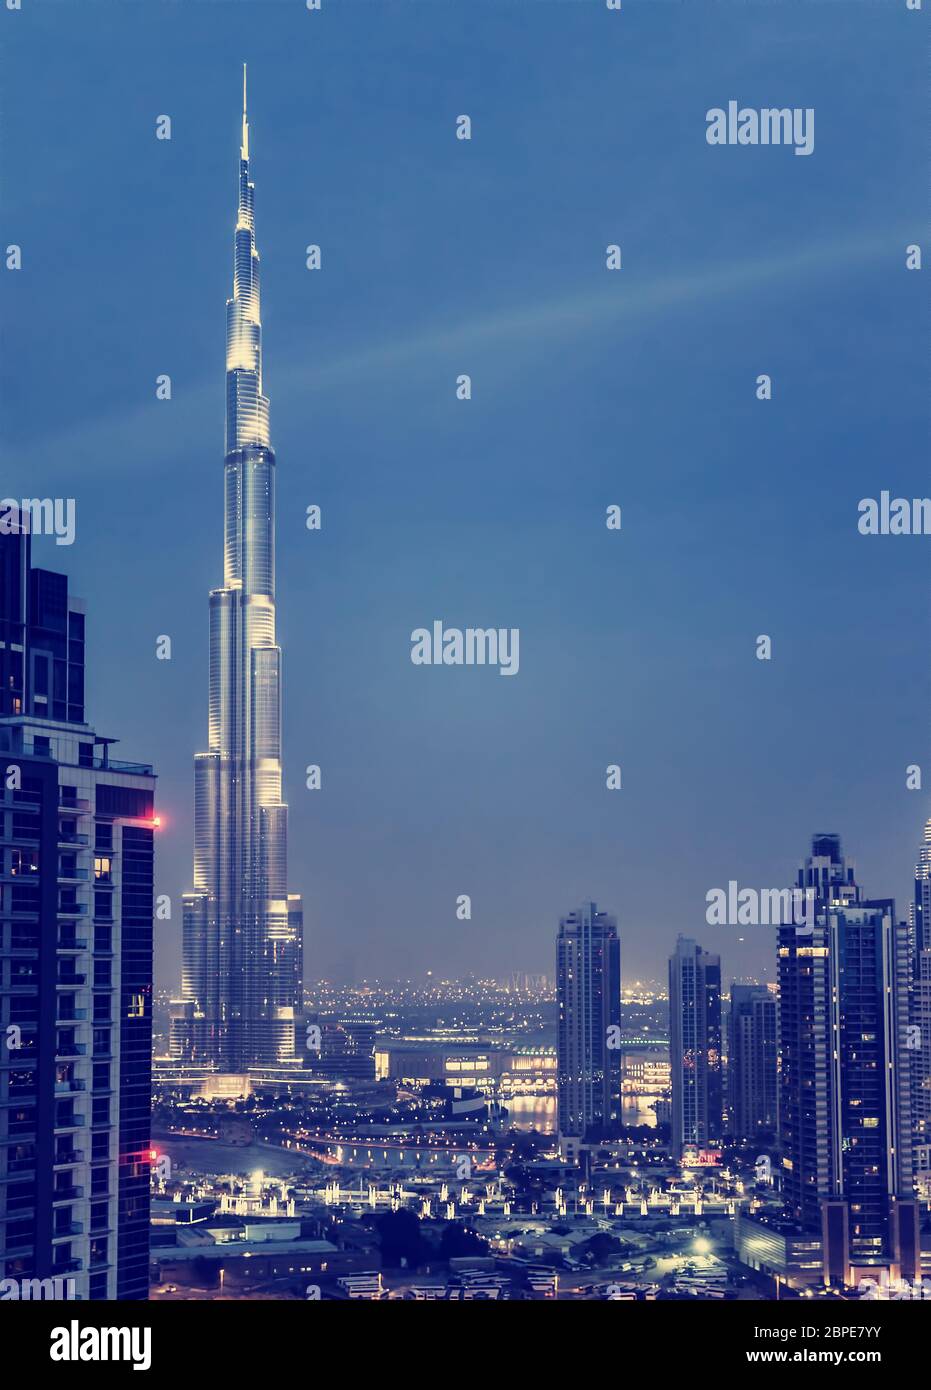 DUBAI, UAE - JANUARY 28: Burj Khalifa, world's tallest tower at 828m, located at Downtown, Burj Khalifa at night January 28, 2013 in Dubai, United Ara Stock Photo